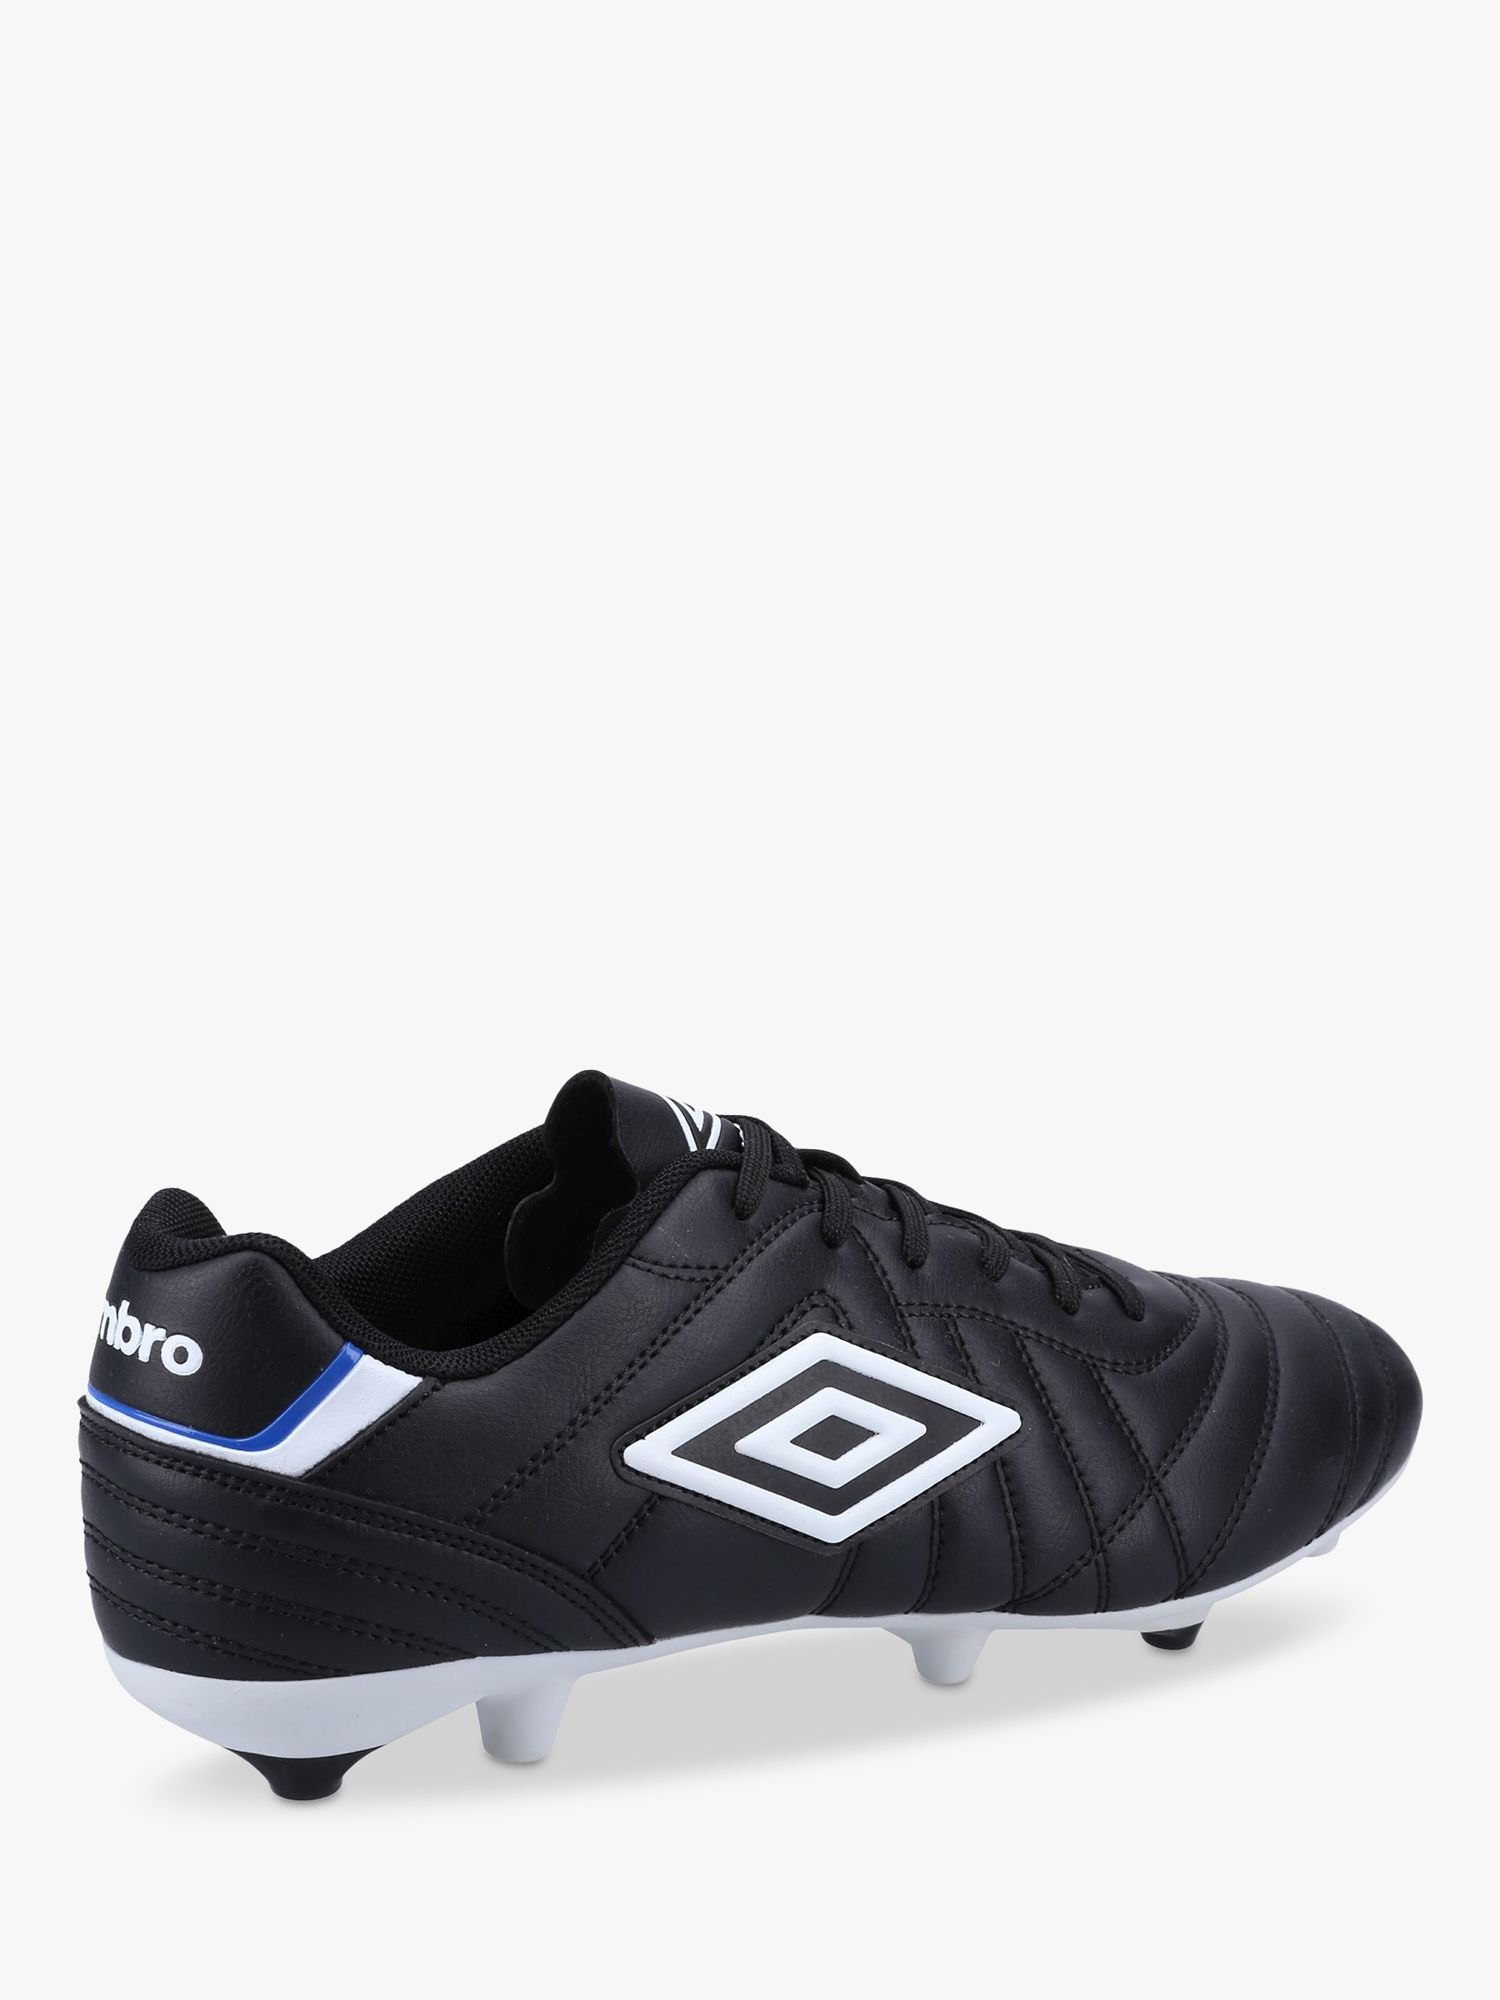 Umbro Speciali Liga Firm Ground Football Boots, Black, 6